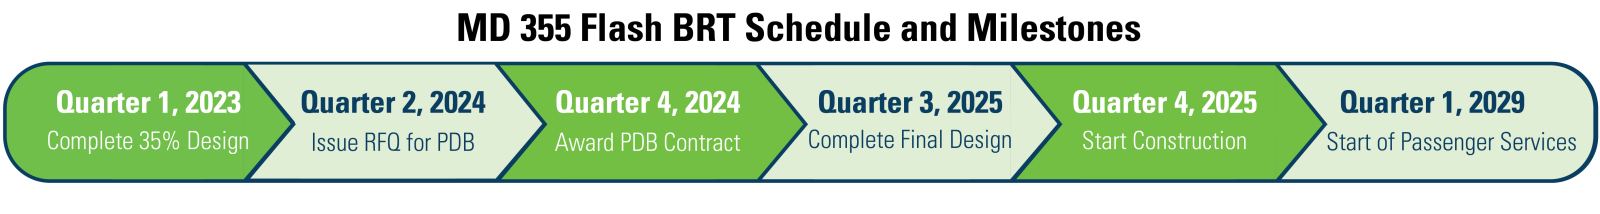 Timeline Milestones: Q1 2023: Complete 35% Design, Q2 2024: Issue RFQ for PDB, Q4 2024L Award Contract, Q3 2025: Complete Final Design, Q4 2025: Start Construction, Q1 2029: Start Passenger Services. 